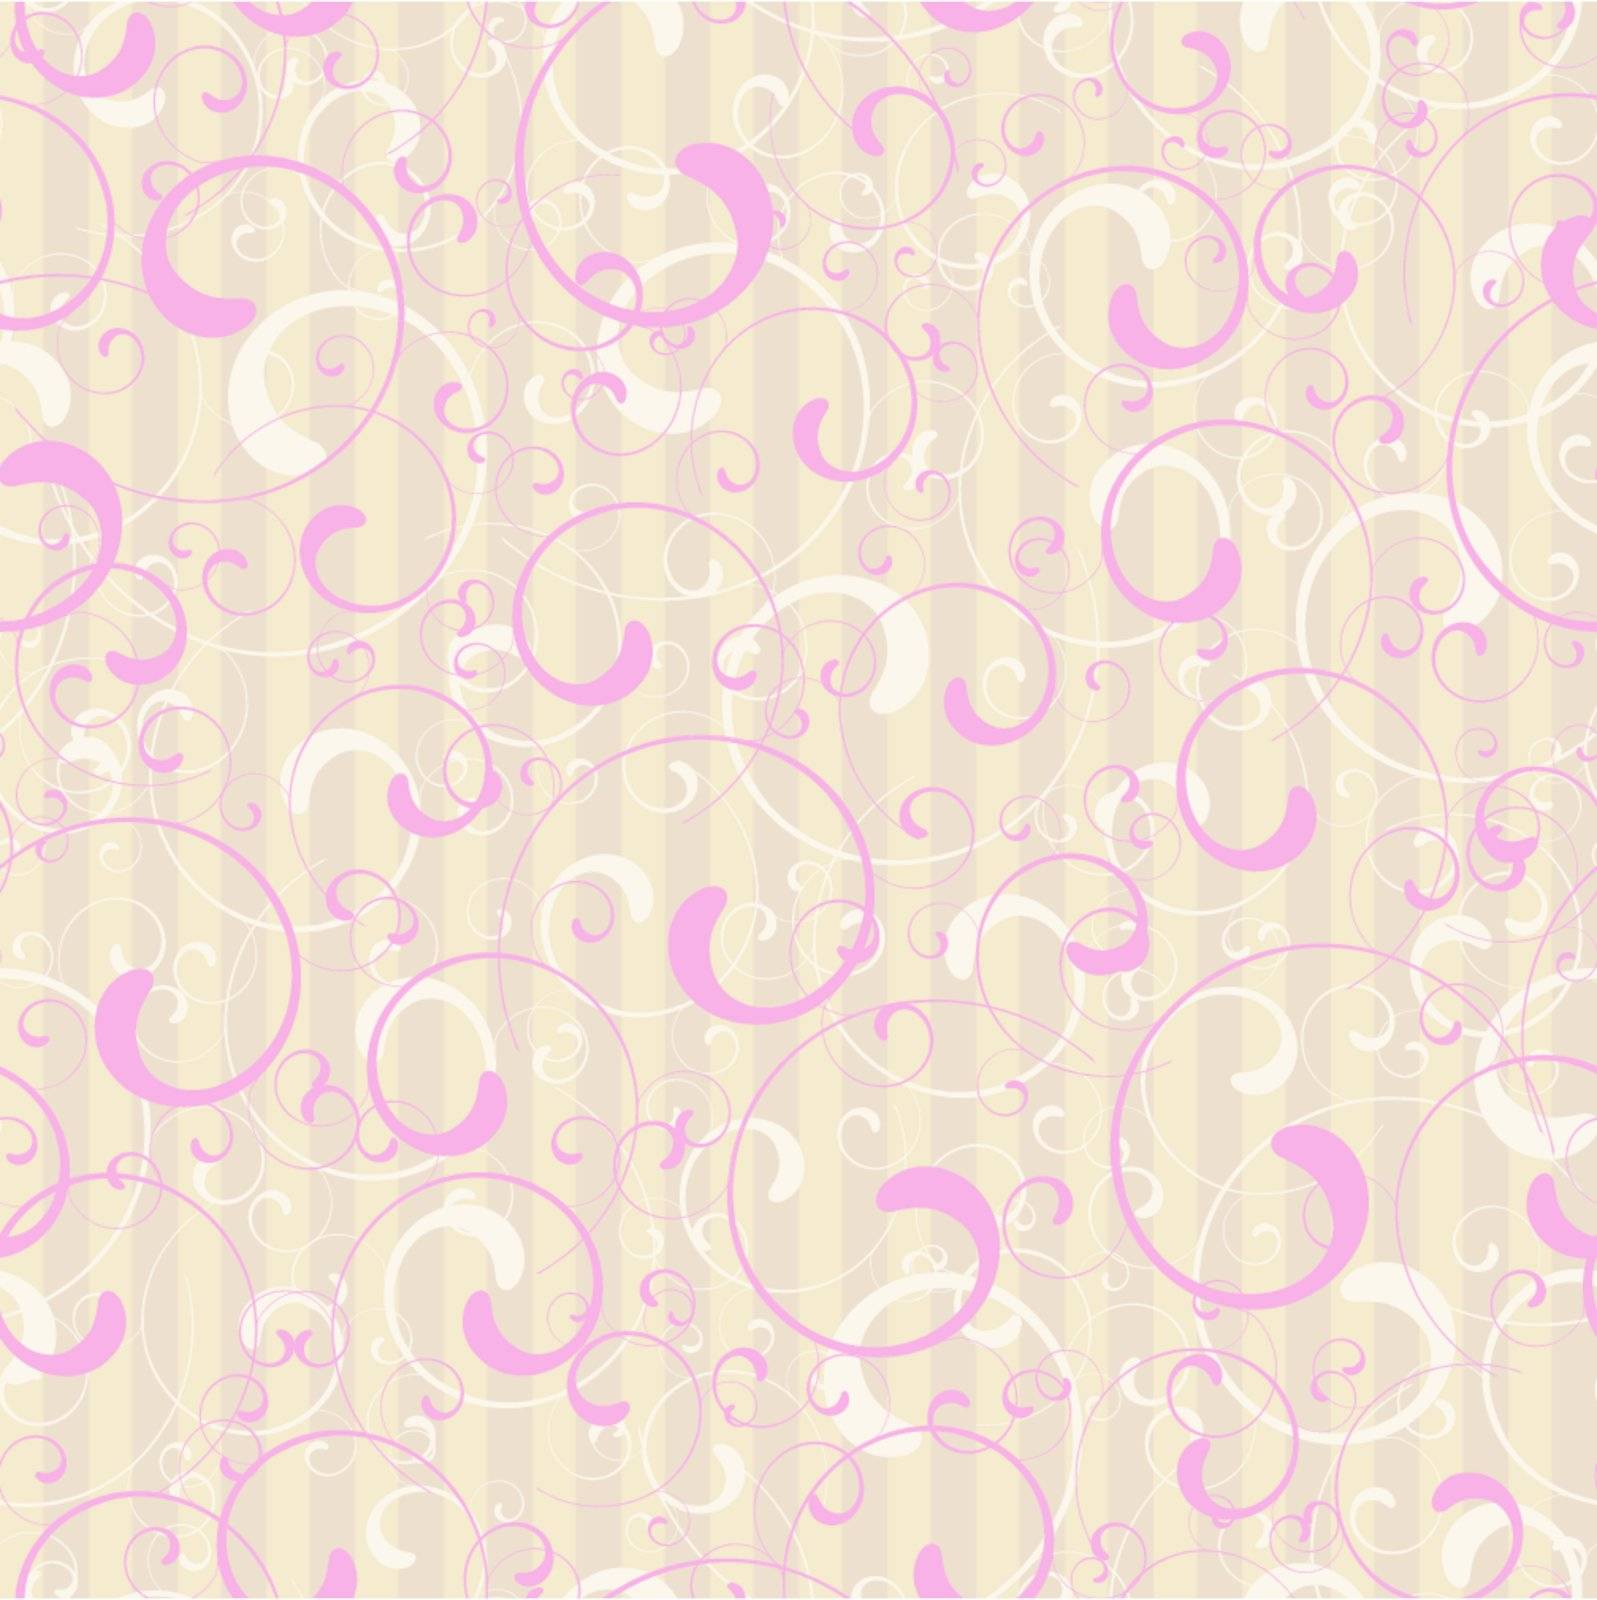 Editable vector seamless tile wallpaper of twirl shapes